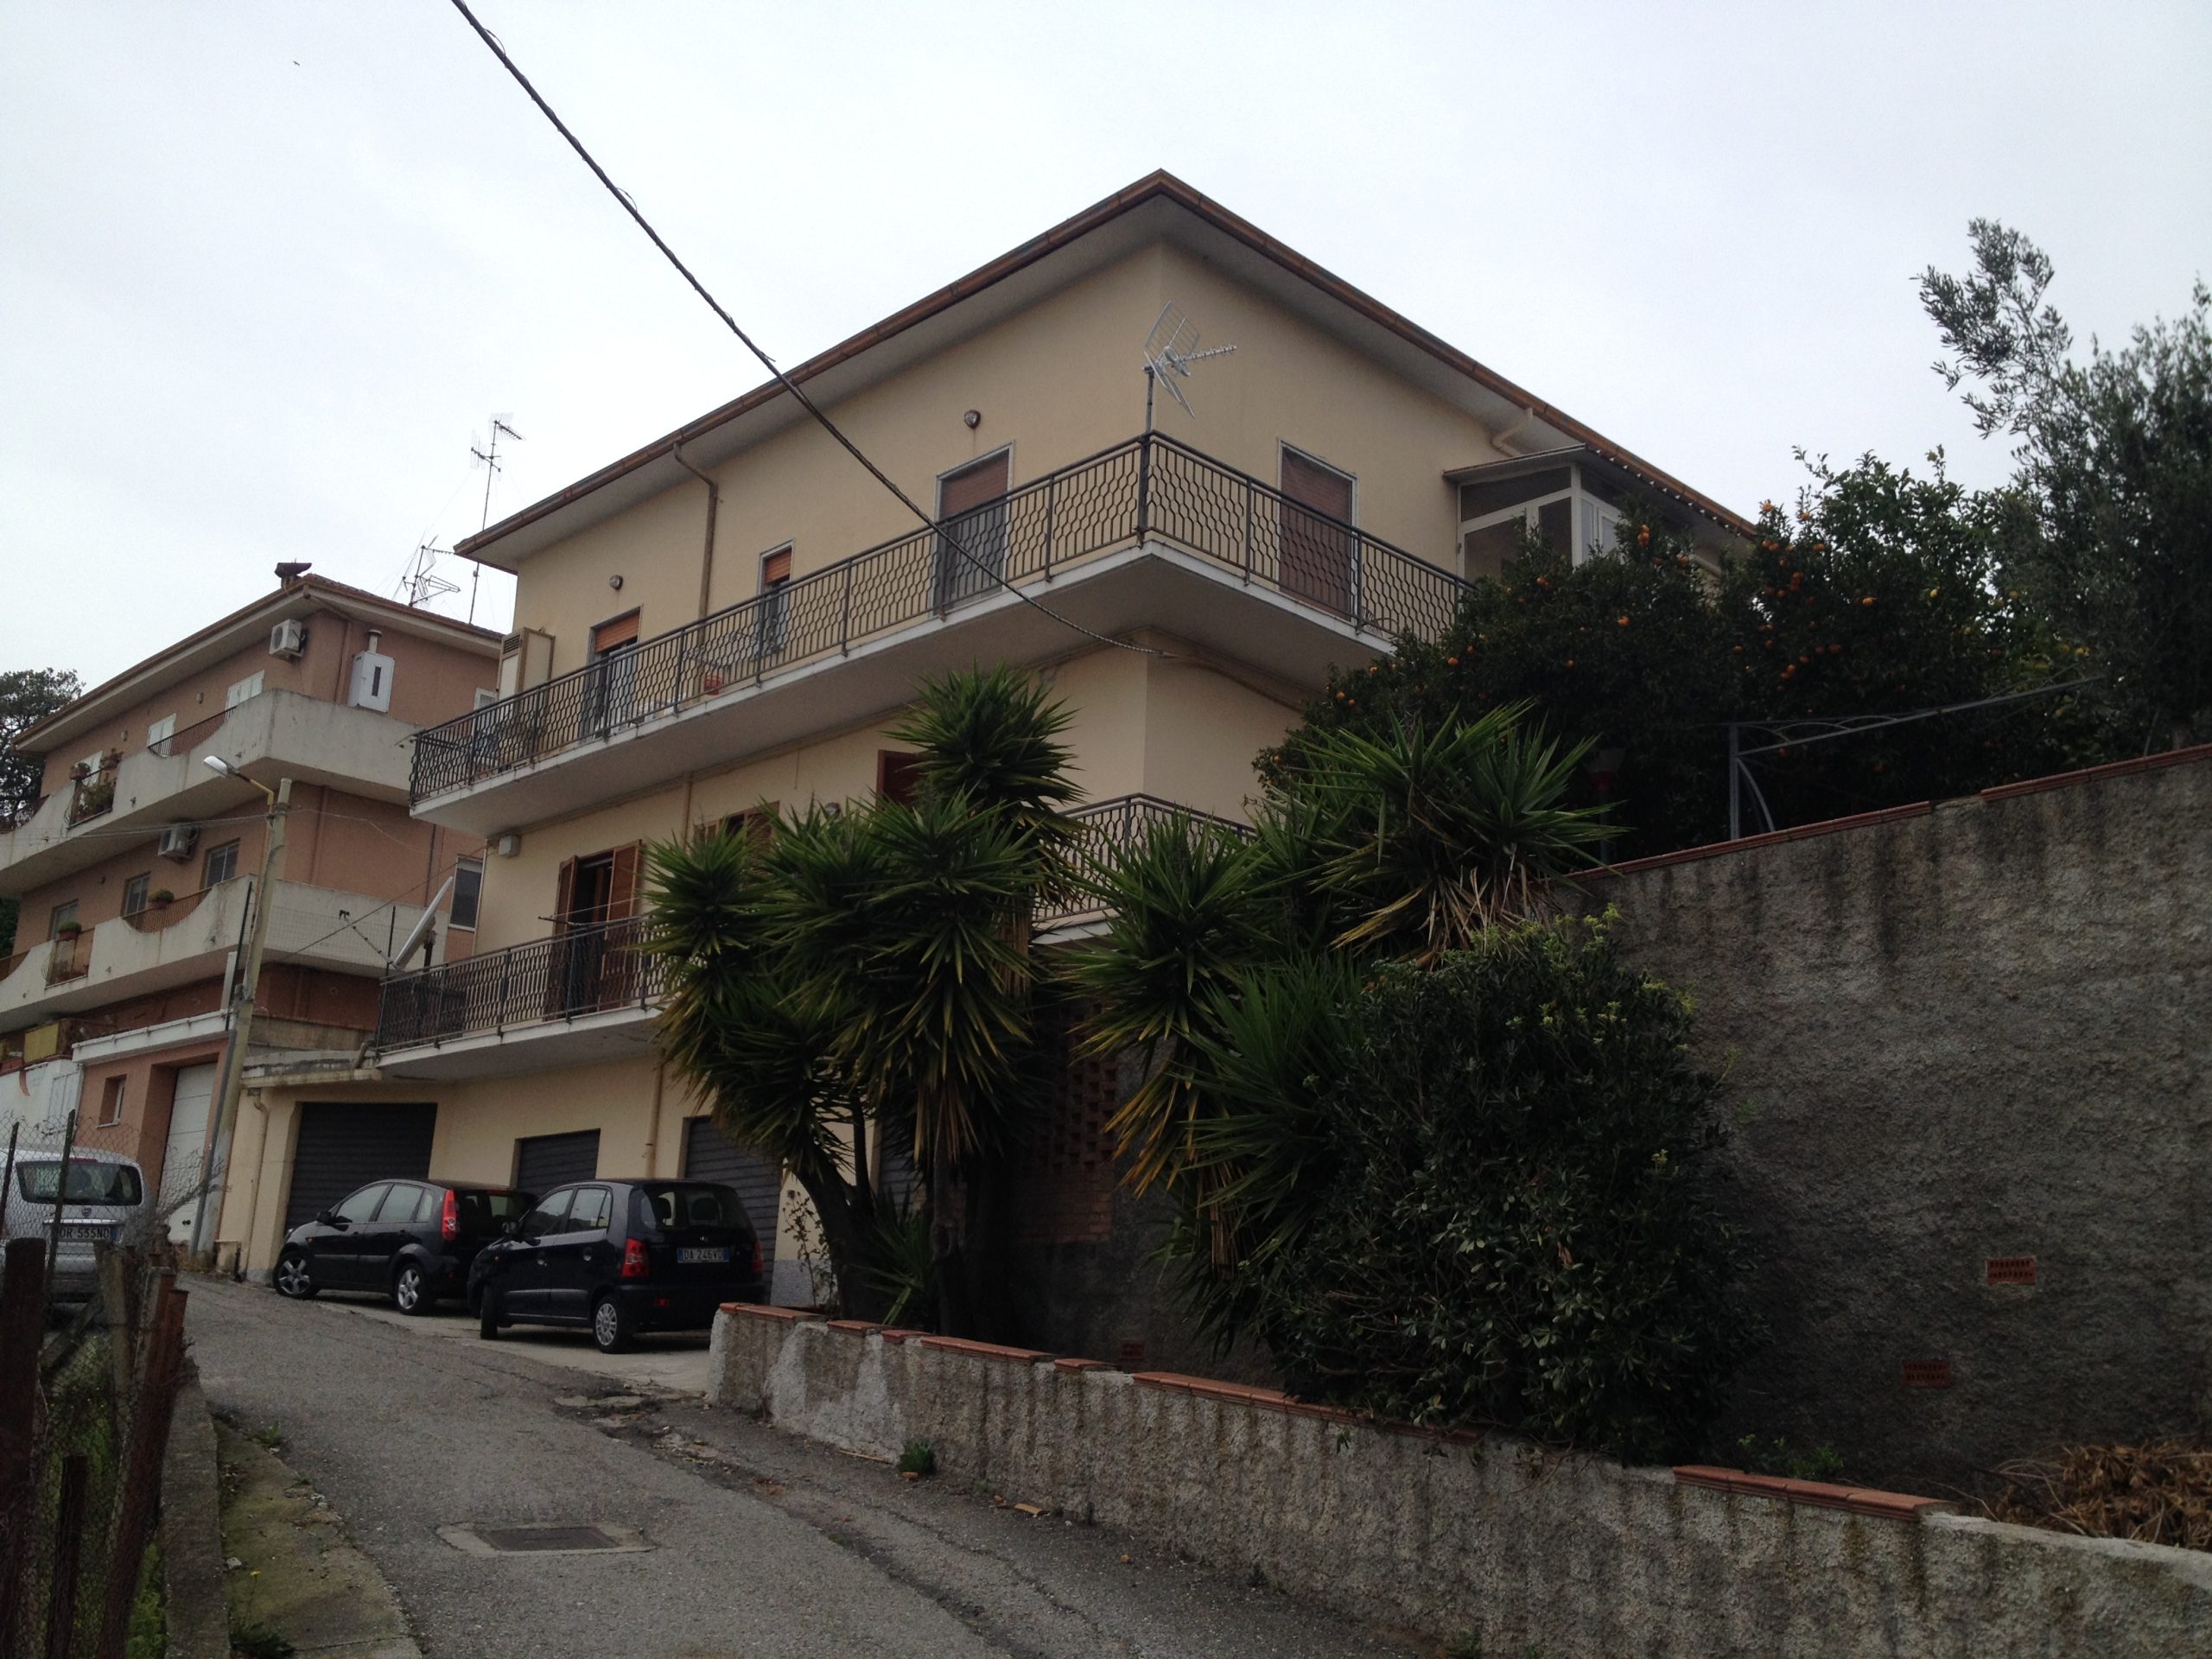 Via Lucrezia della valle: comodo appartamento con giardino e cortile esterno